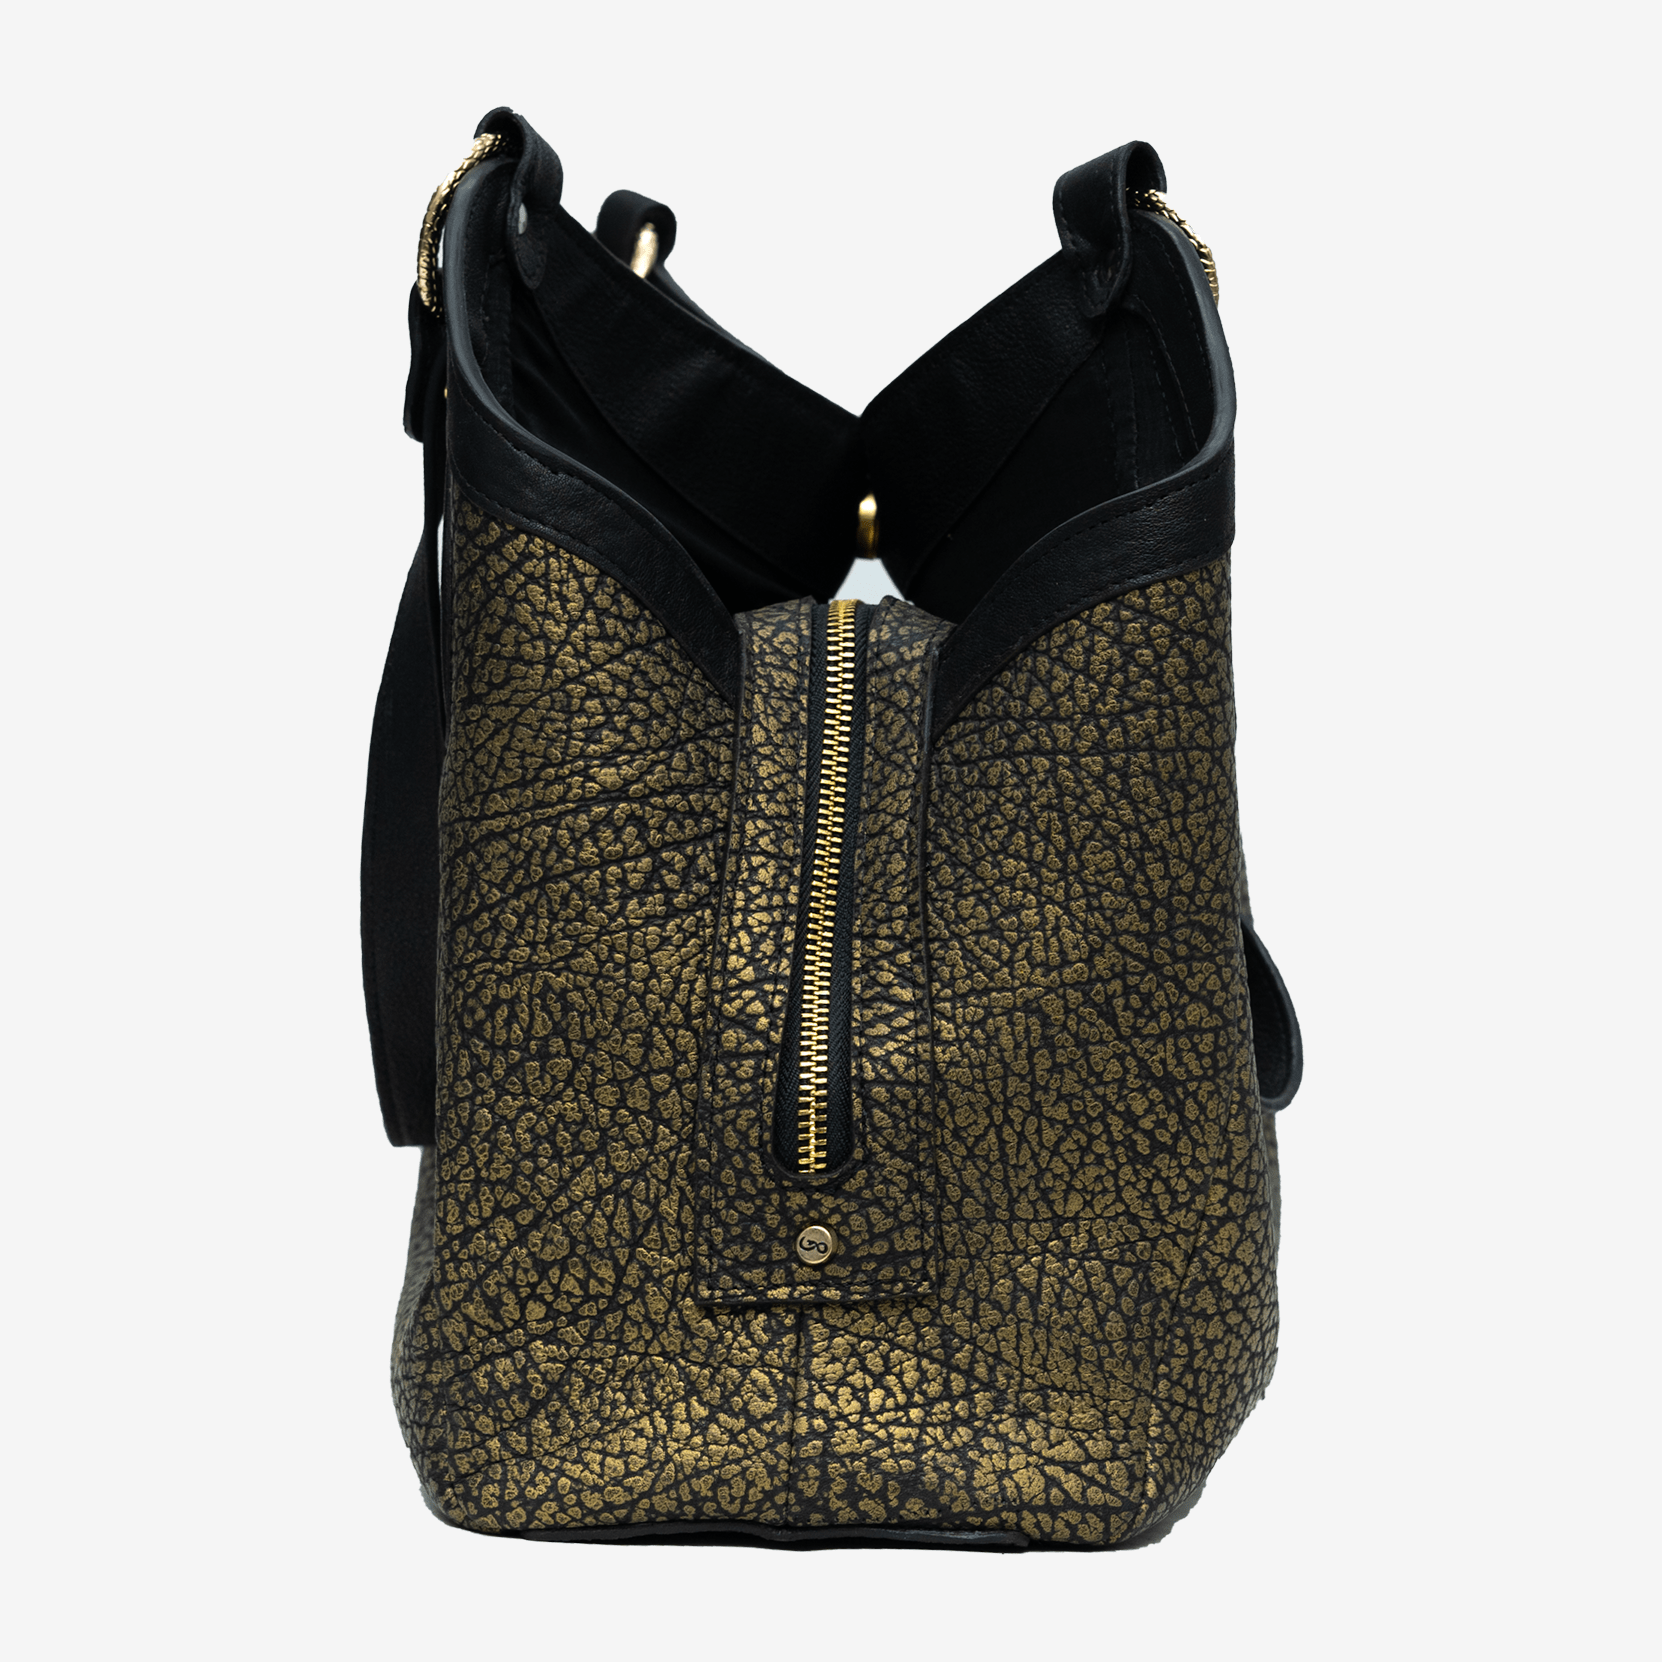 Veneno Leather Goods Bolsa Shoulder bag  - BARBARA golden girl